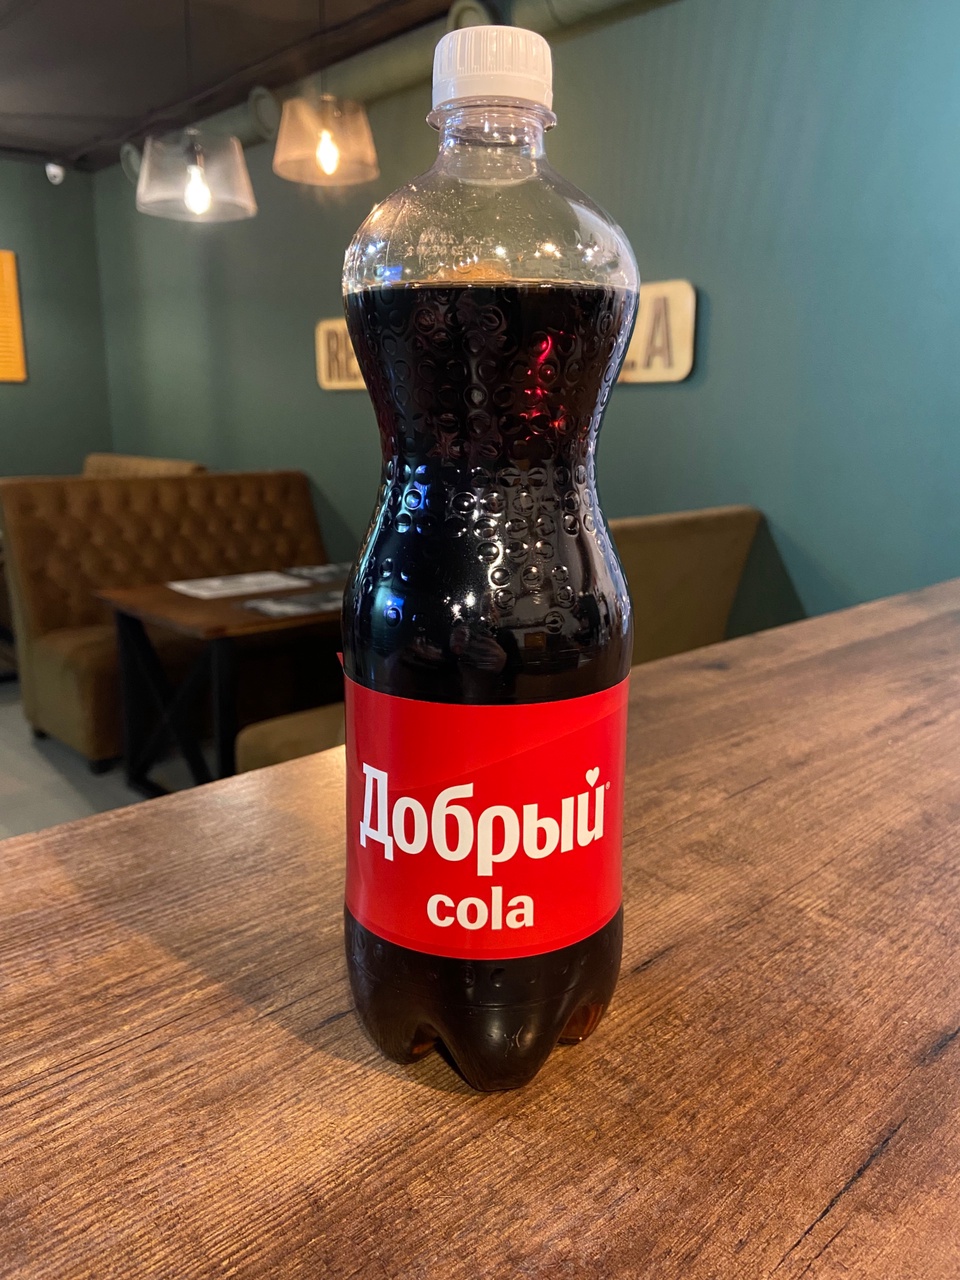 Добрый Cola - 150 ₽, заказать онлайн.